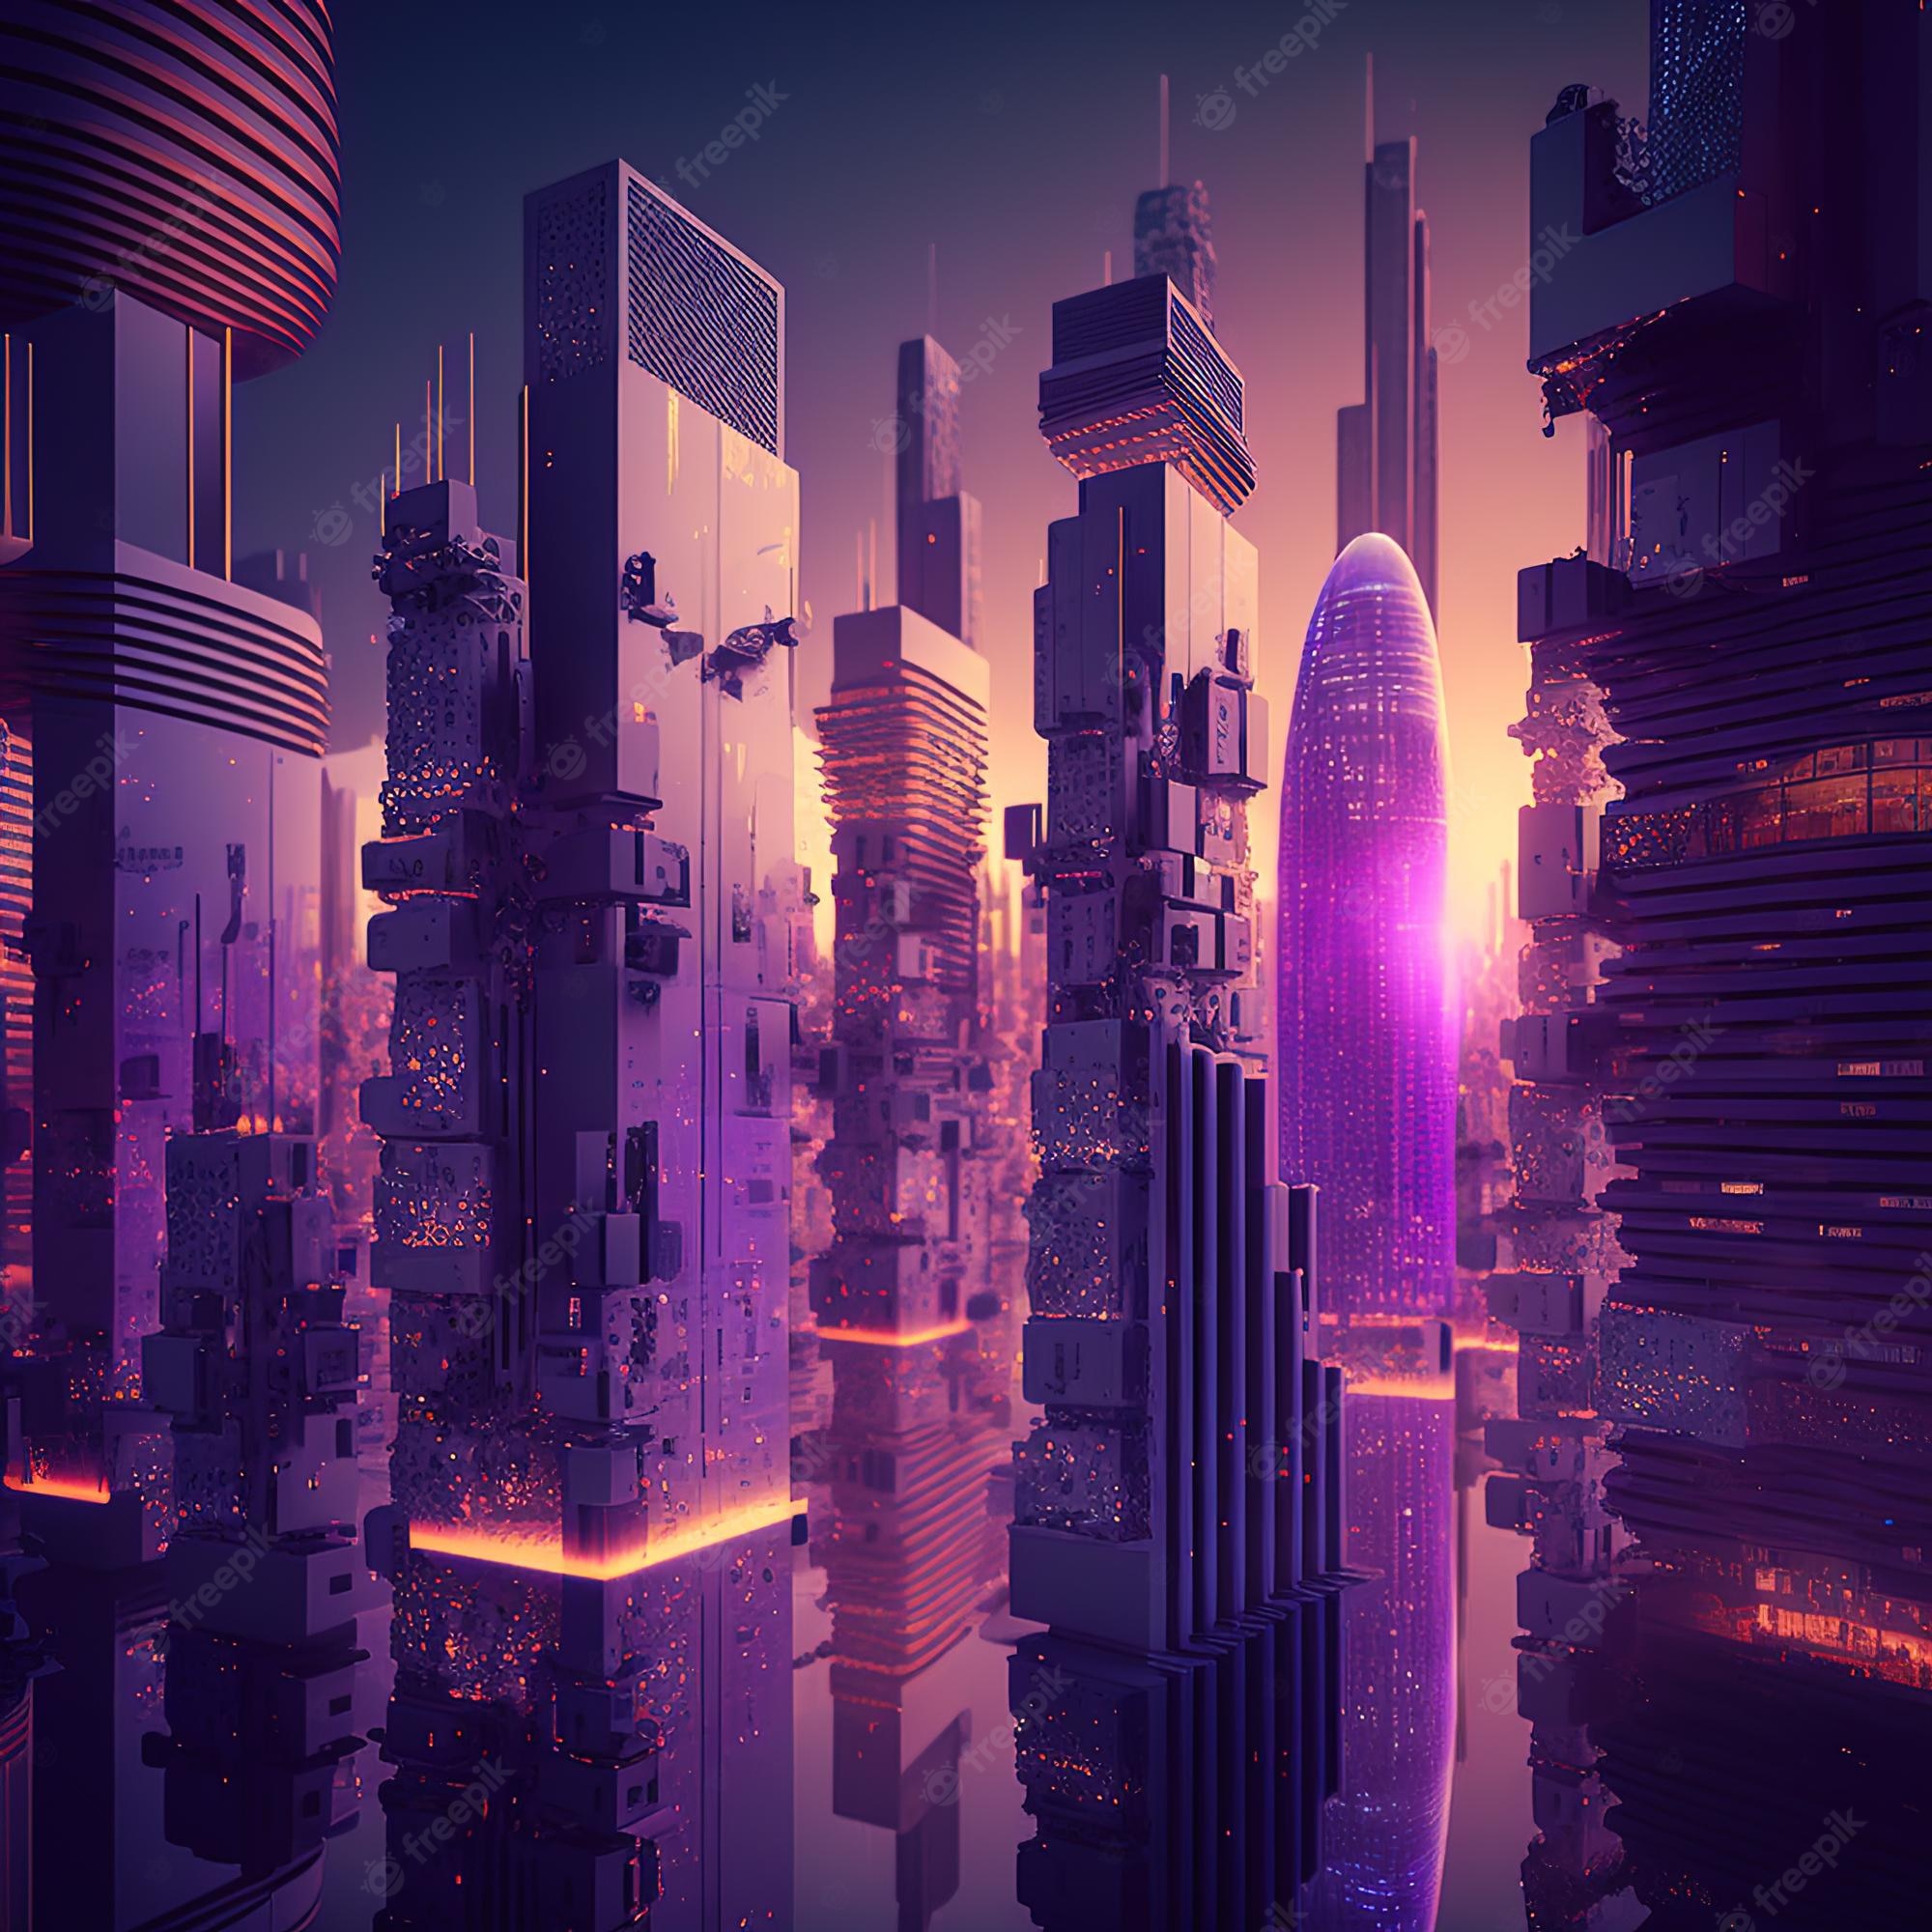 Premium Photo. Techno mega city urban and futuristic technology concepts smart city internet 3D illustration